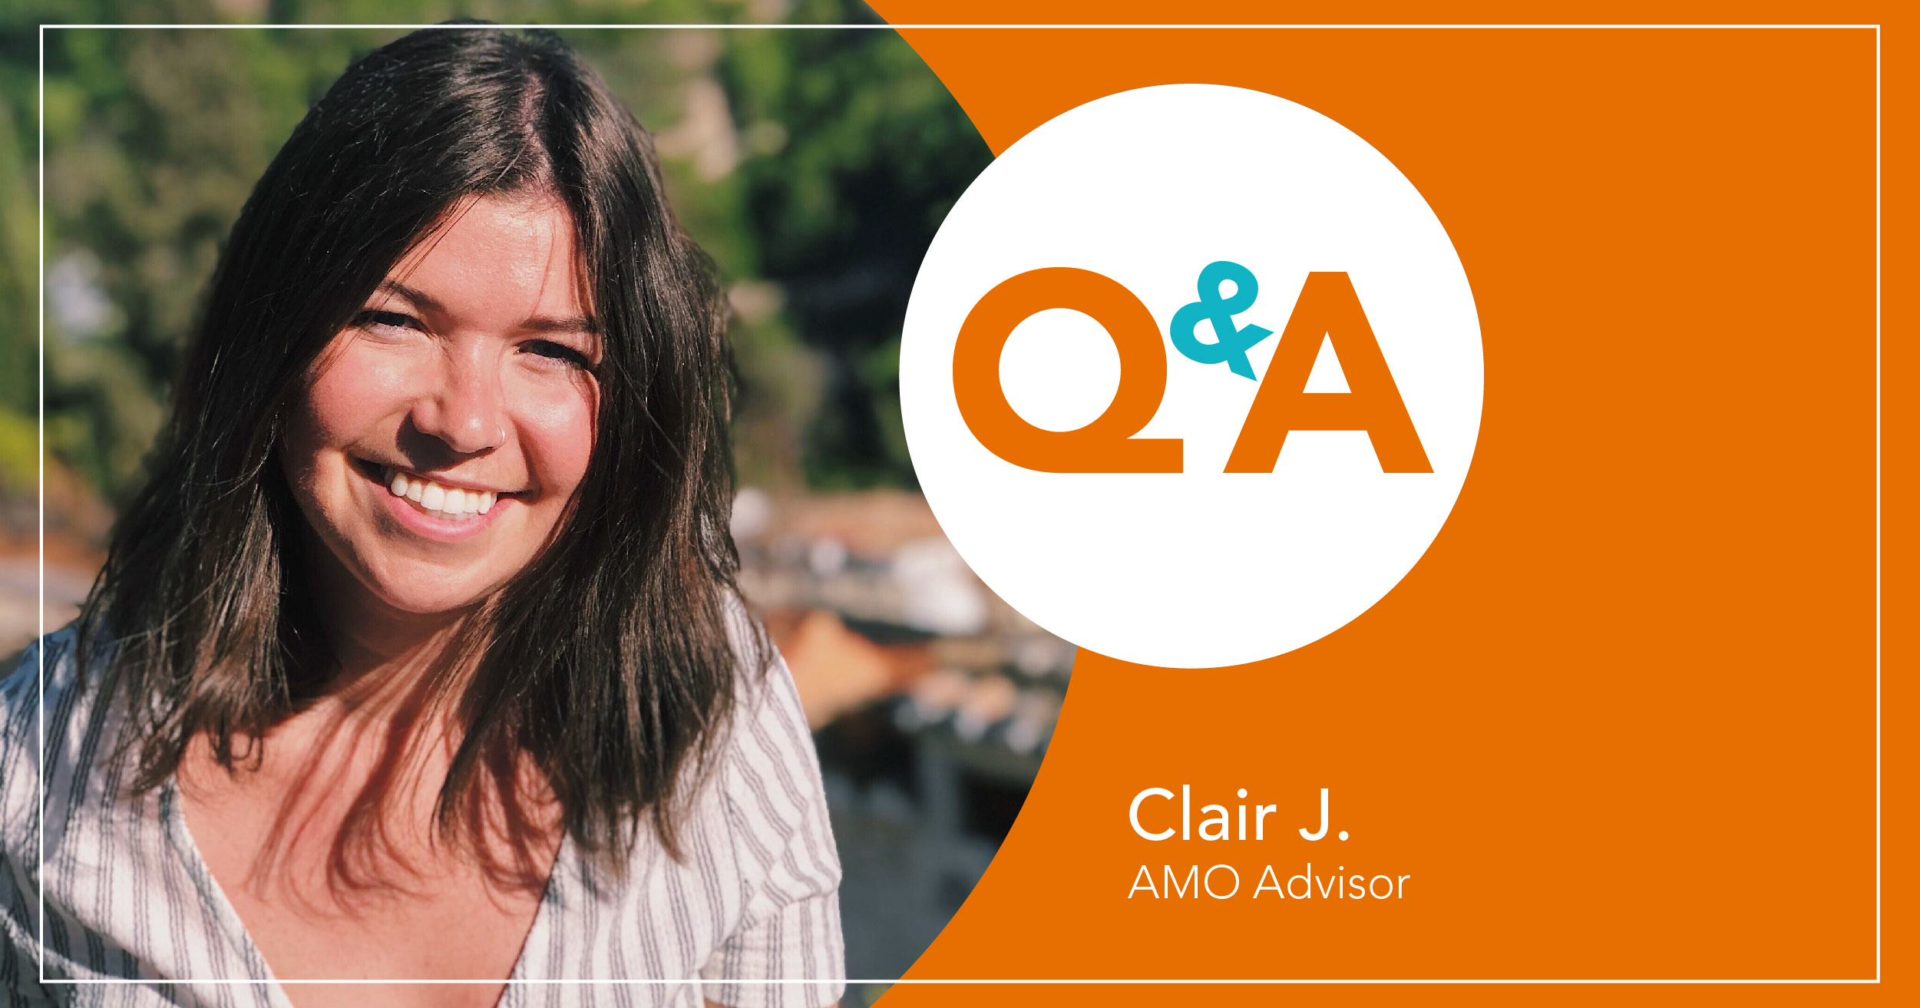 Meet AMO Advisor Clair